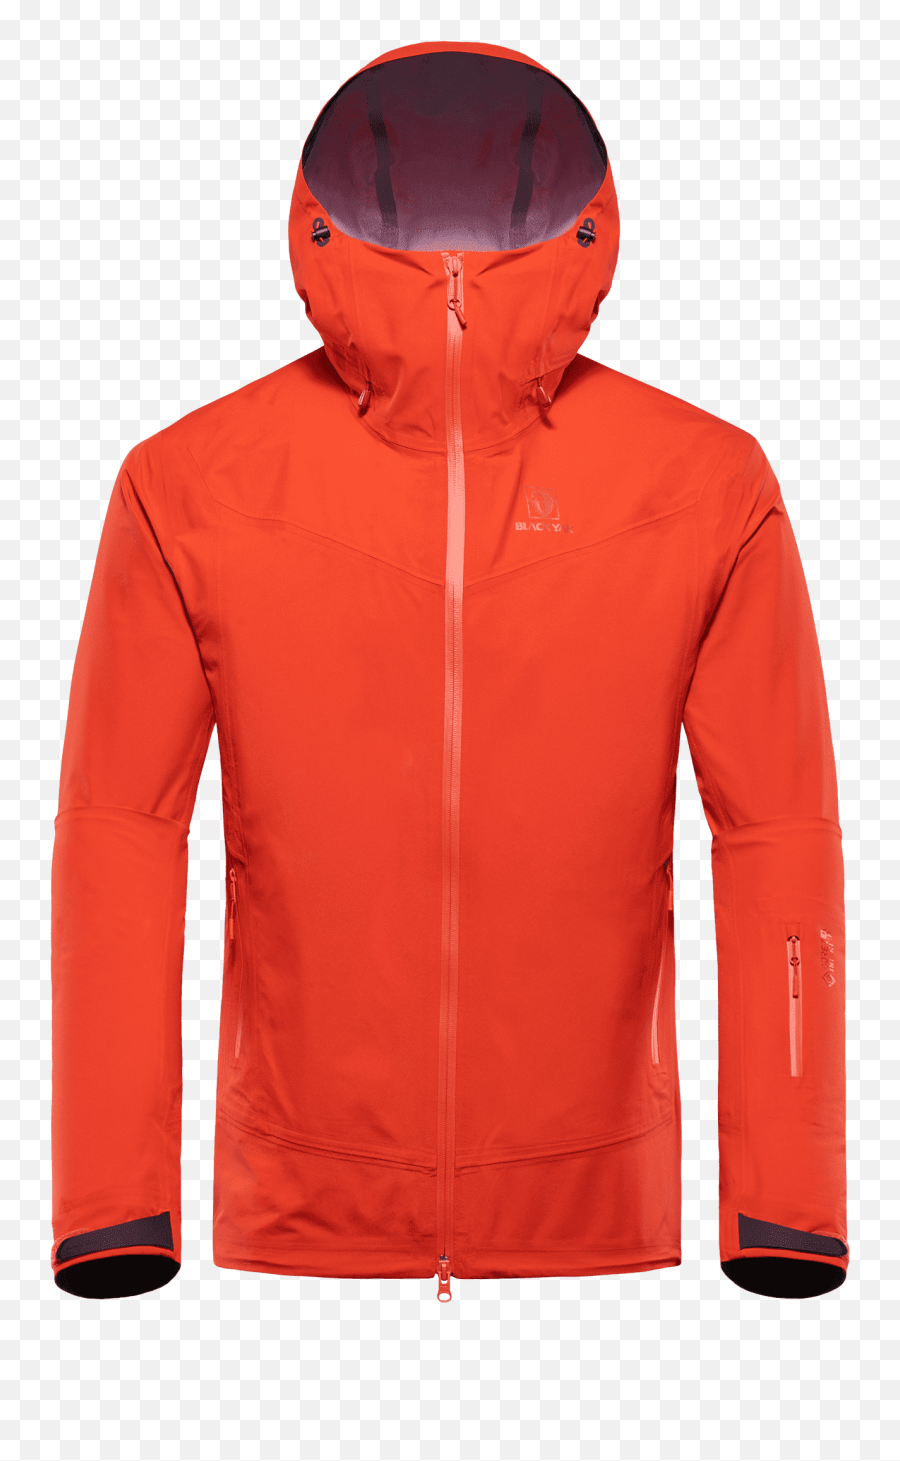 Kostroma Jacket - Color Twist Of Lime Size Xl Blackyak Kostroma Jacket Png,Icon Arc Stealth Jacket